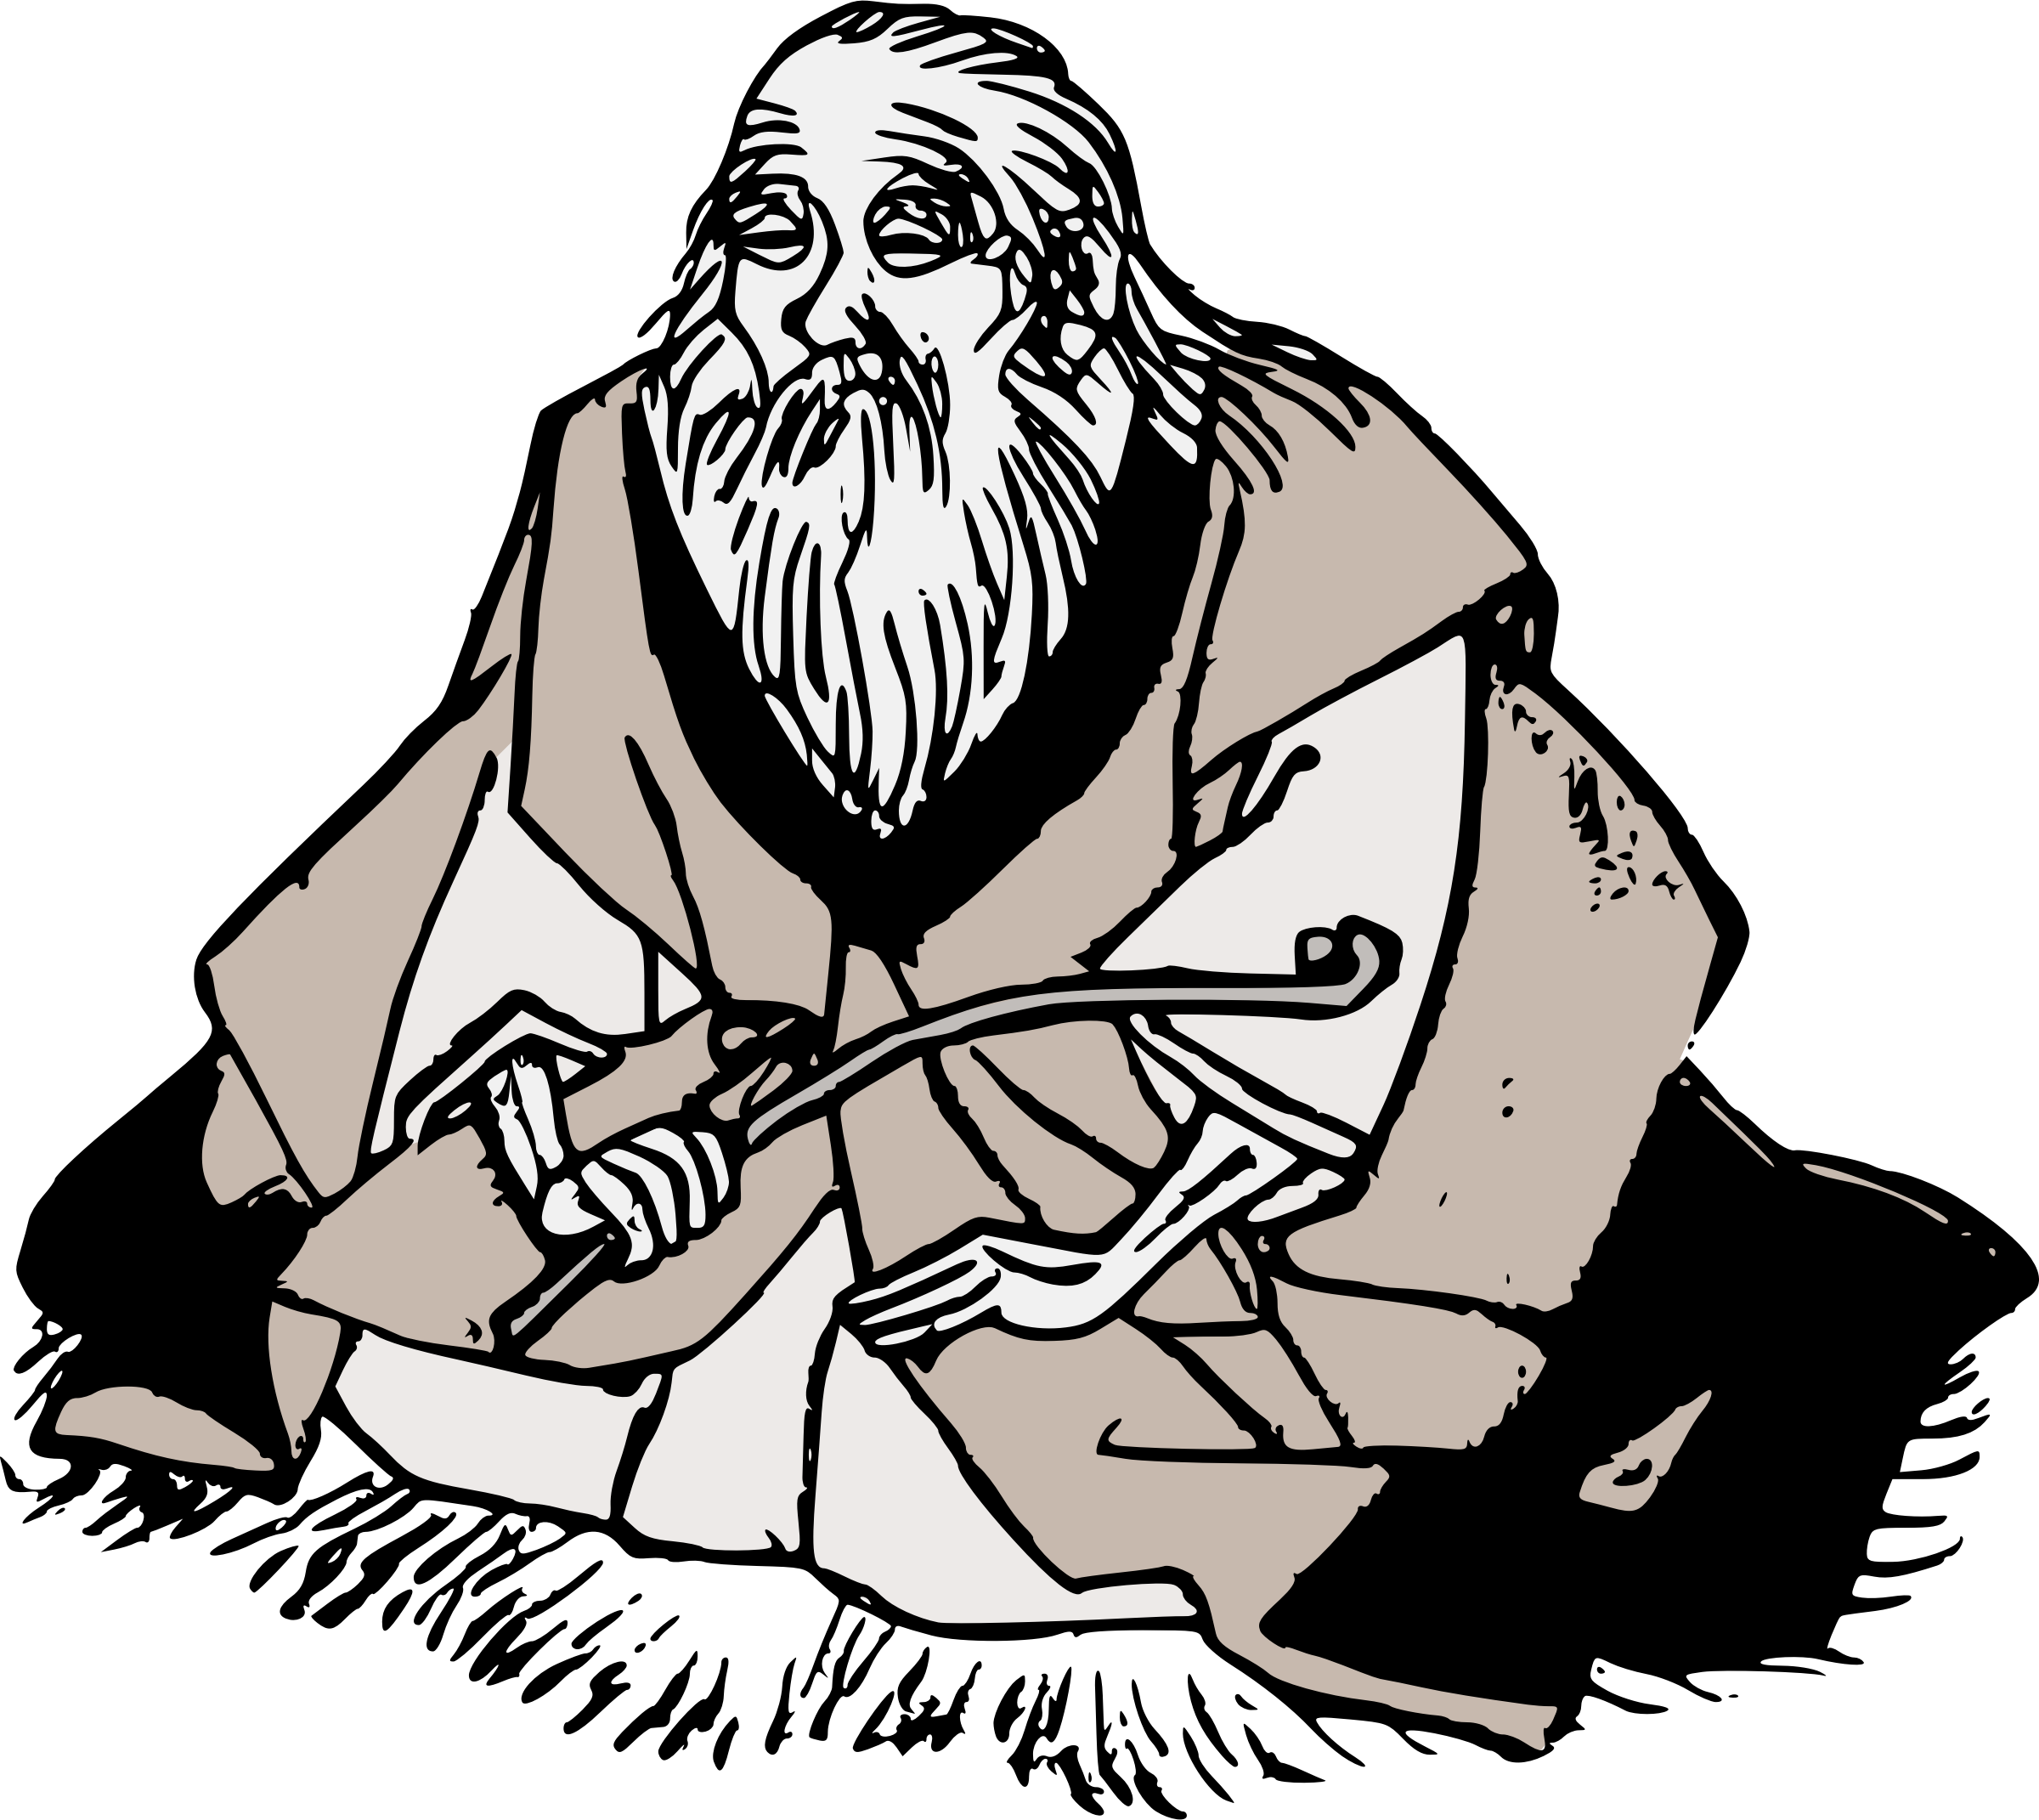 A Cartoon Of A Man With A Long Beard